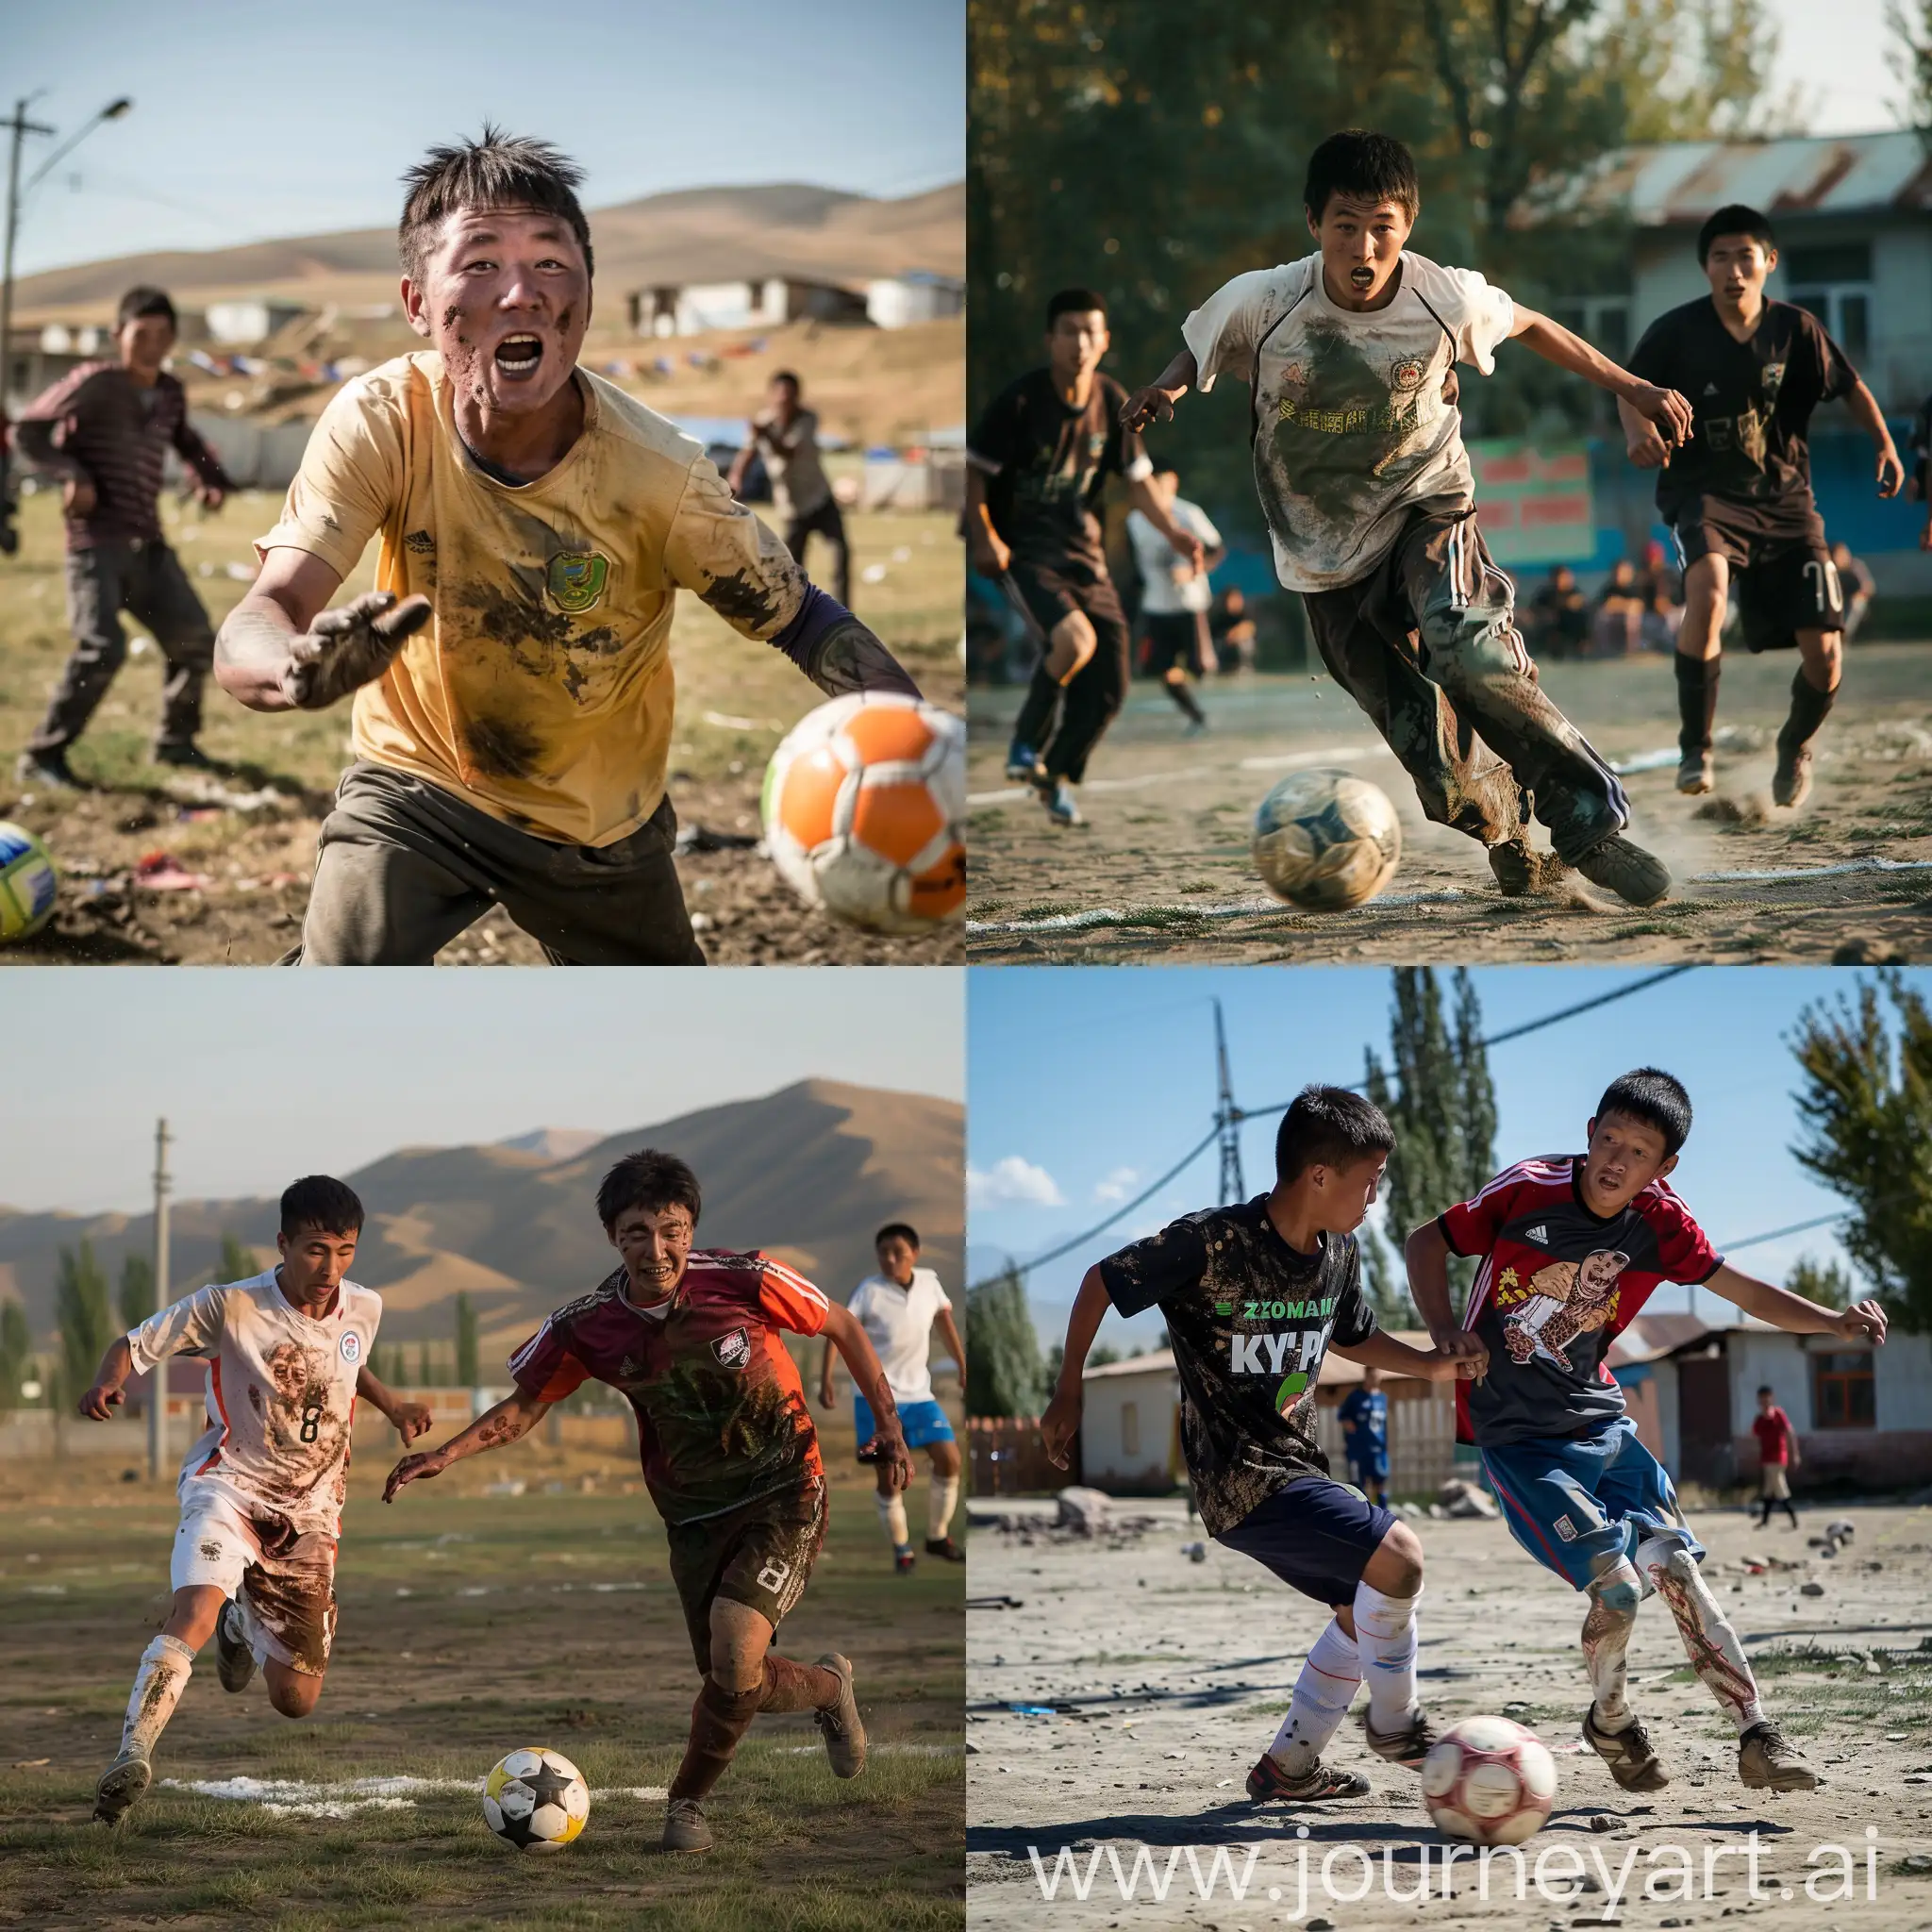 kyrgyz plays soccer with zombe style cinema